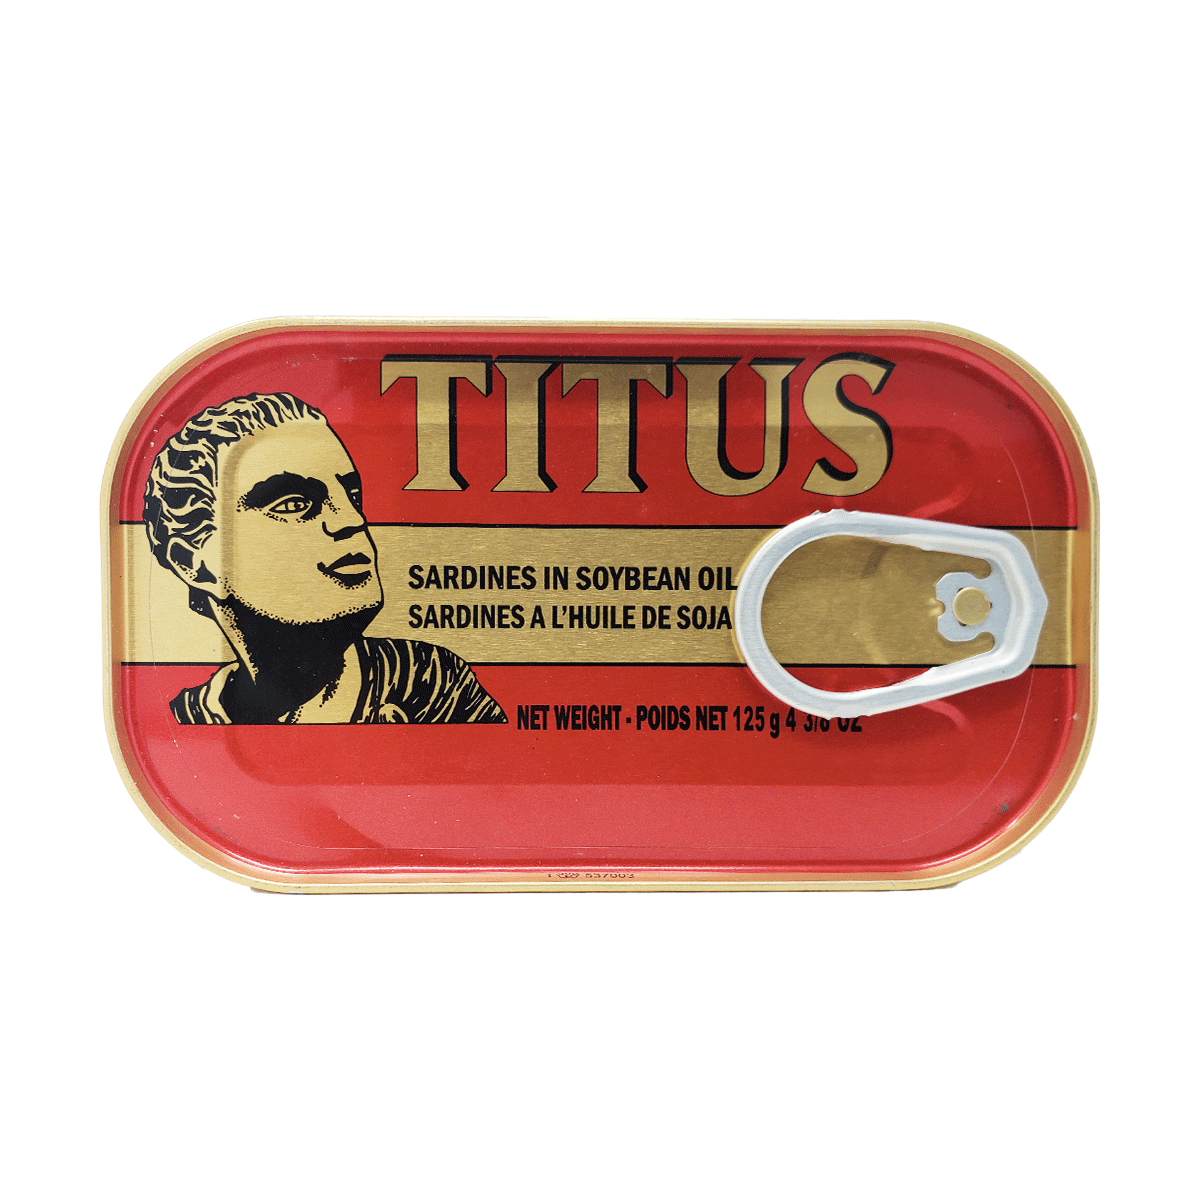 Titus brand